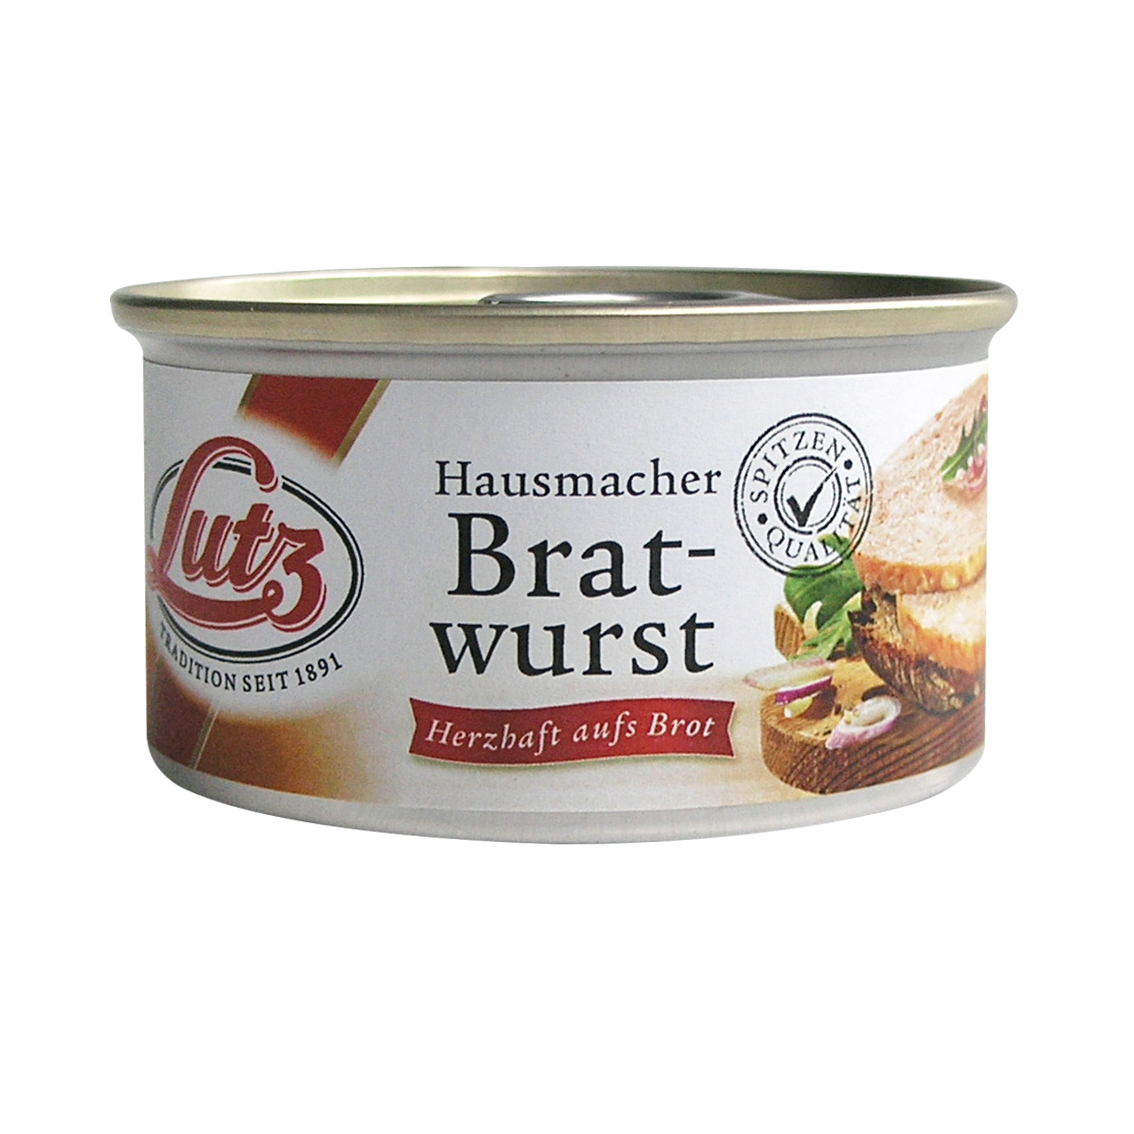 Hausmacher Bratwurst